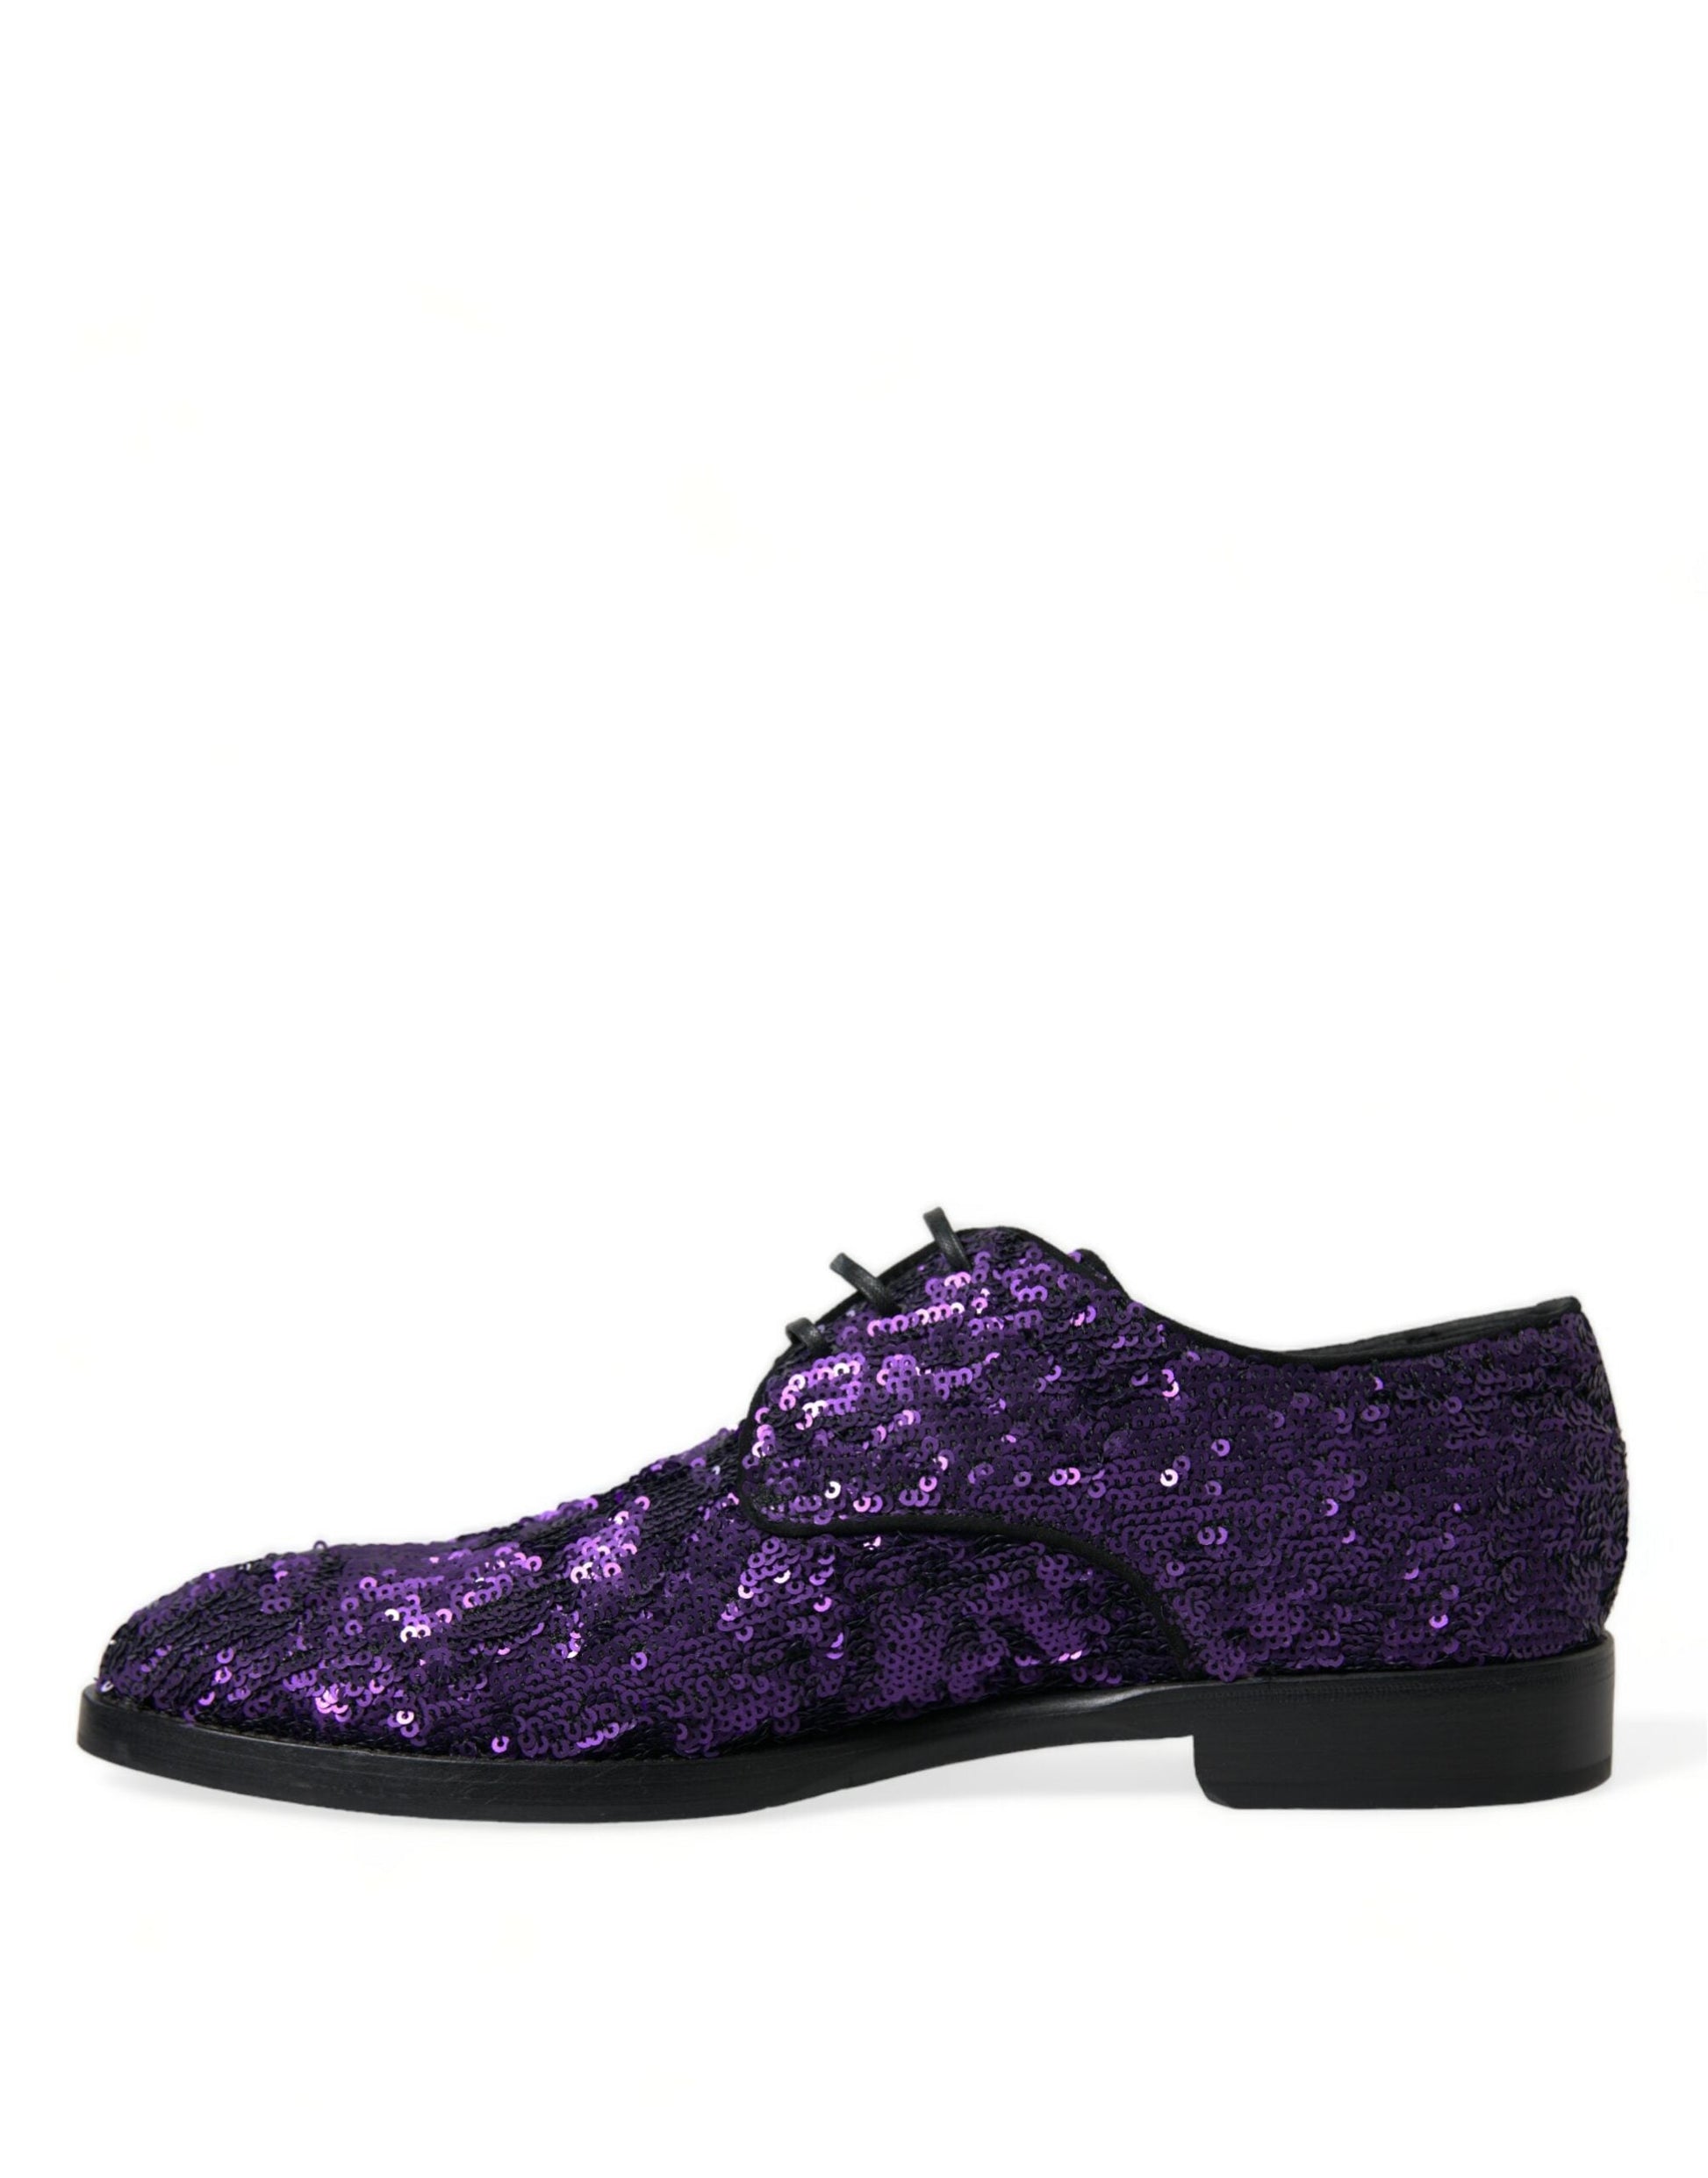 Fashionsarah.com Fashionsarah.com Dolce & Gabbana Purple Sequined Lace Up Oxford Dress Shoes